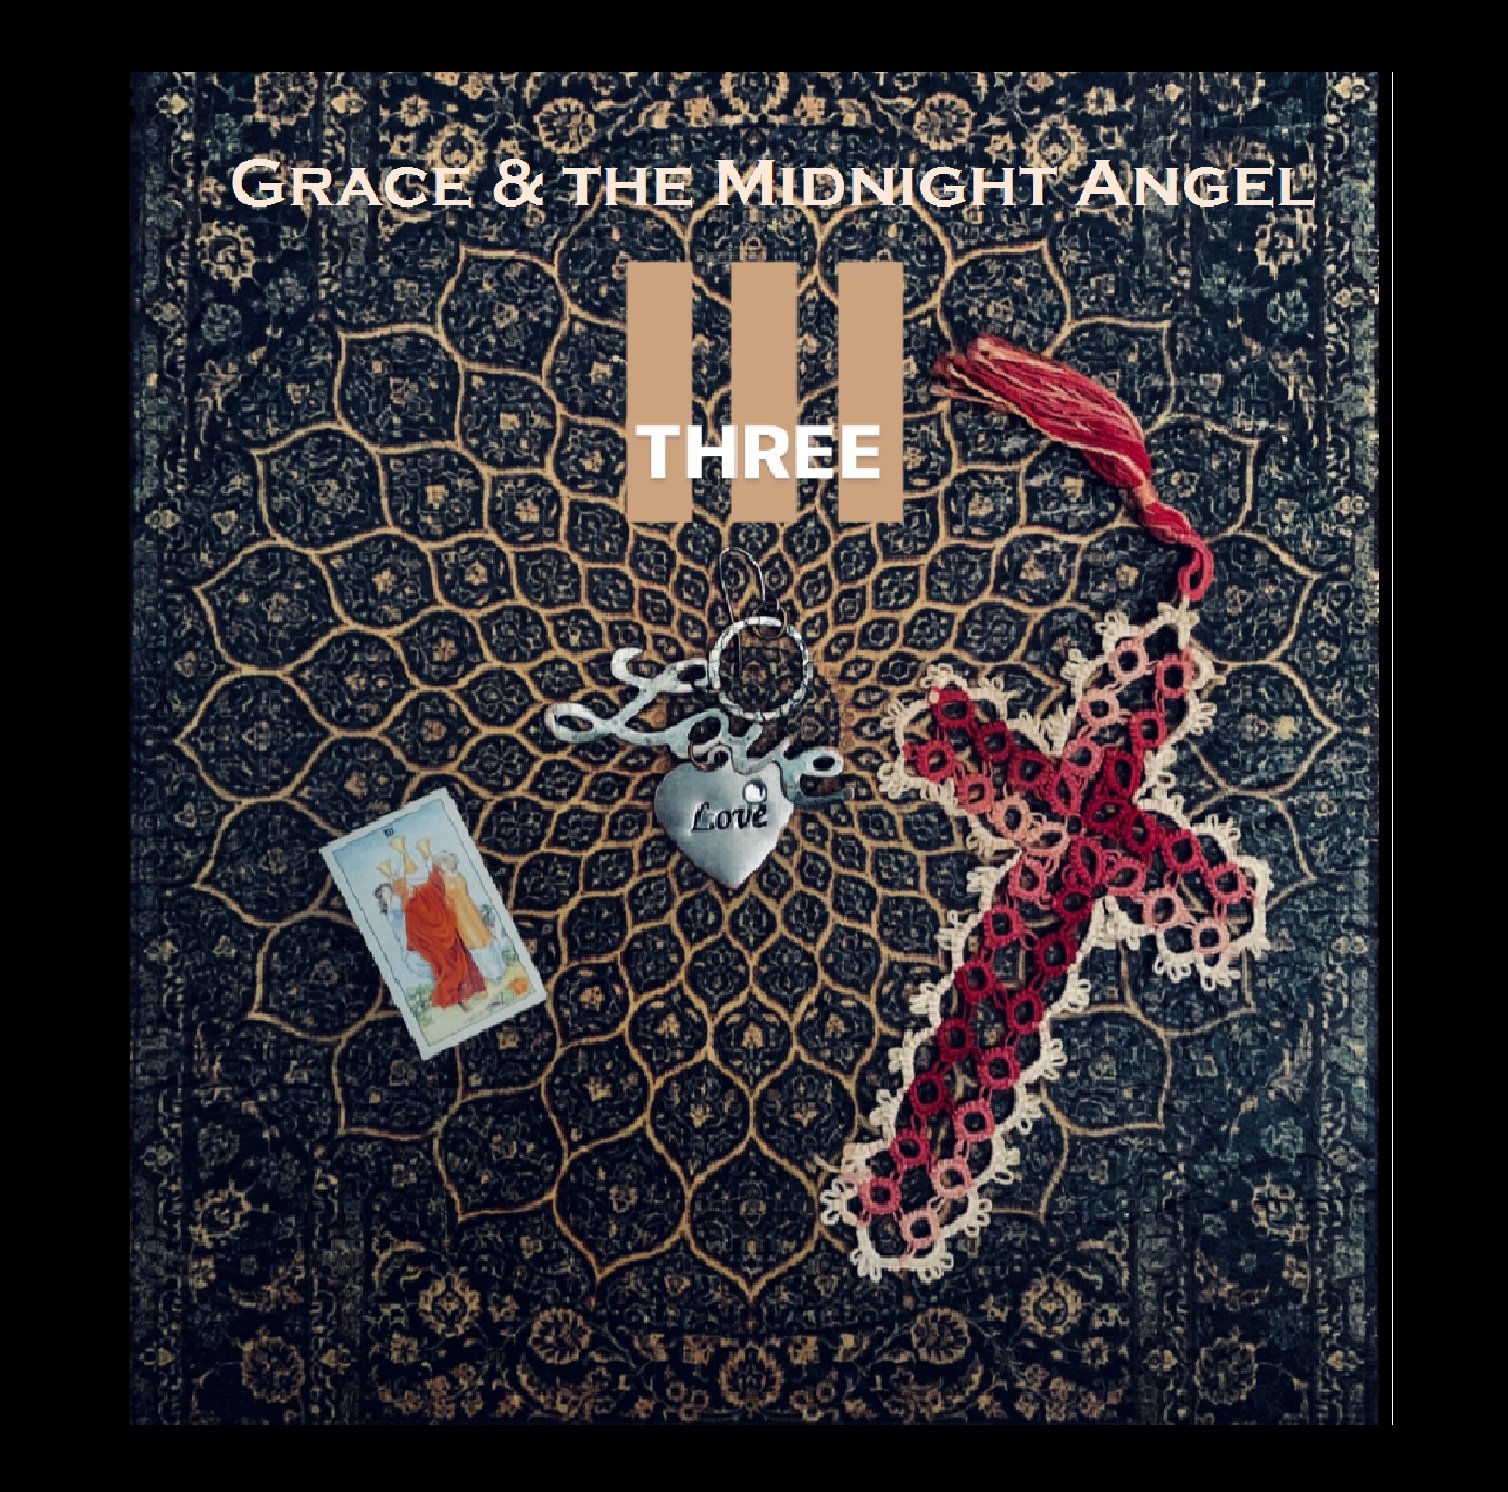 Grace & the Midnight Angel - Three